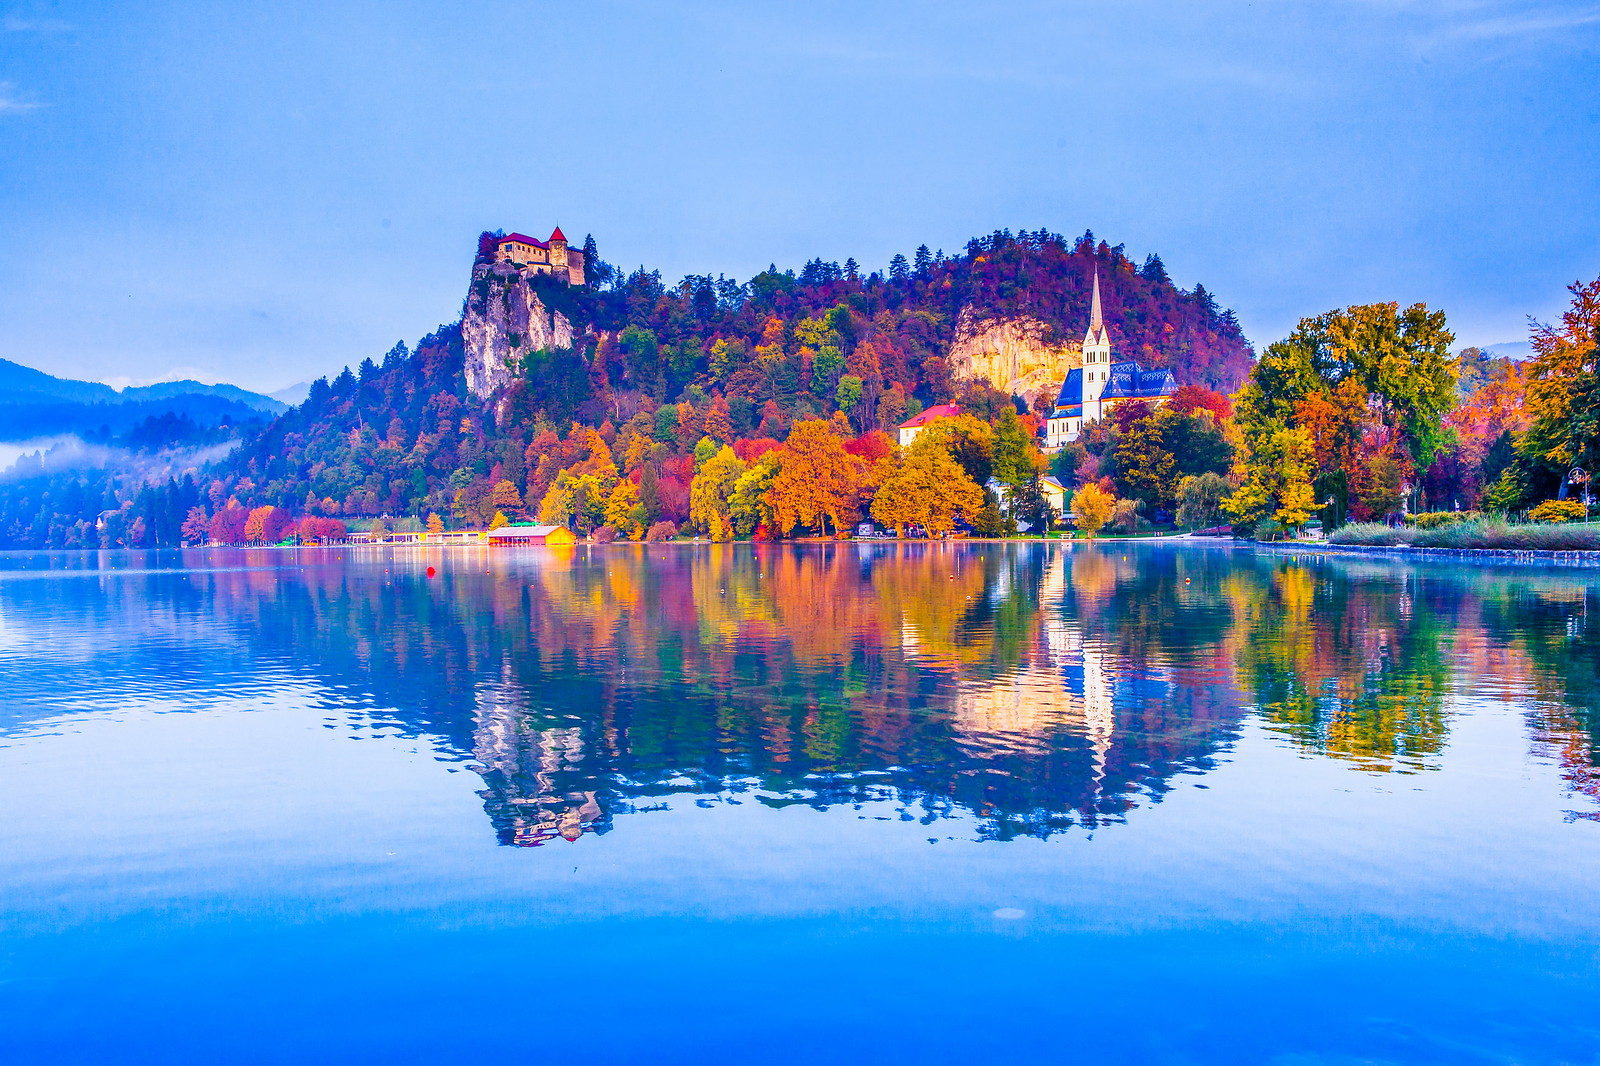 Blad castle, Slovenia 1.jpg